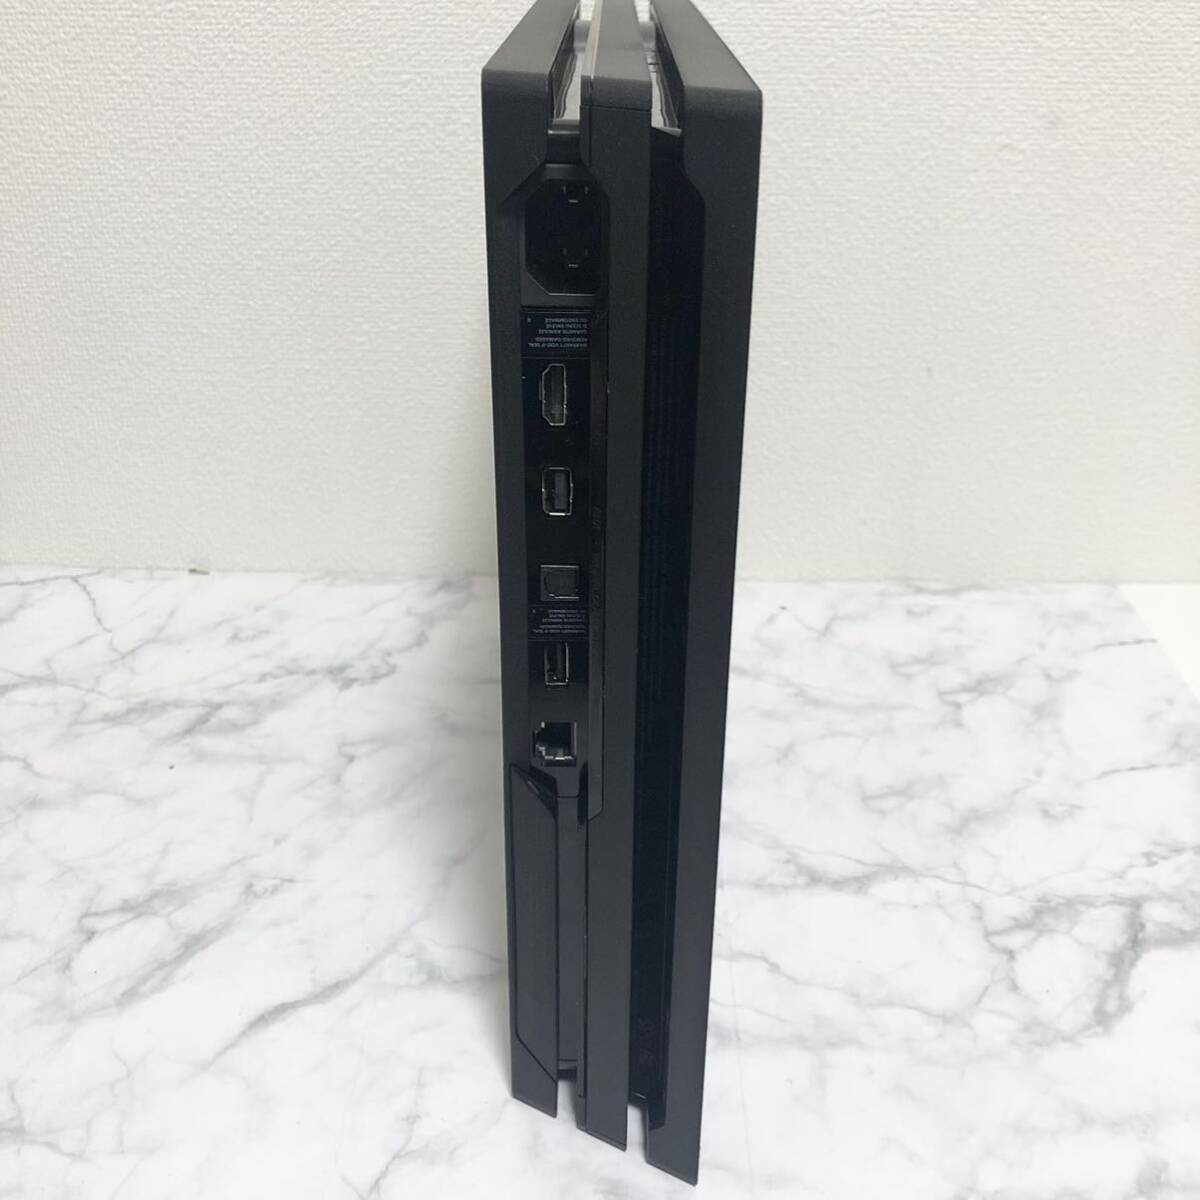 SONY PS4Pro CUH-7015B 1TB ジェットブラック 完品 海外版 FW10.01_画像3